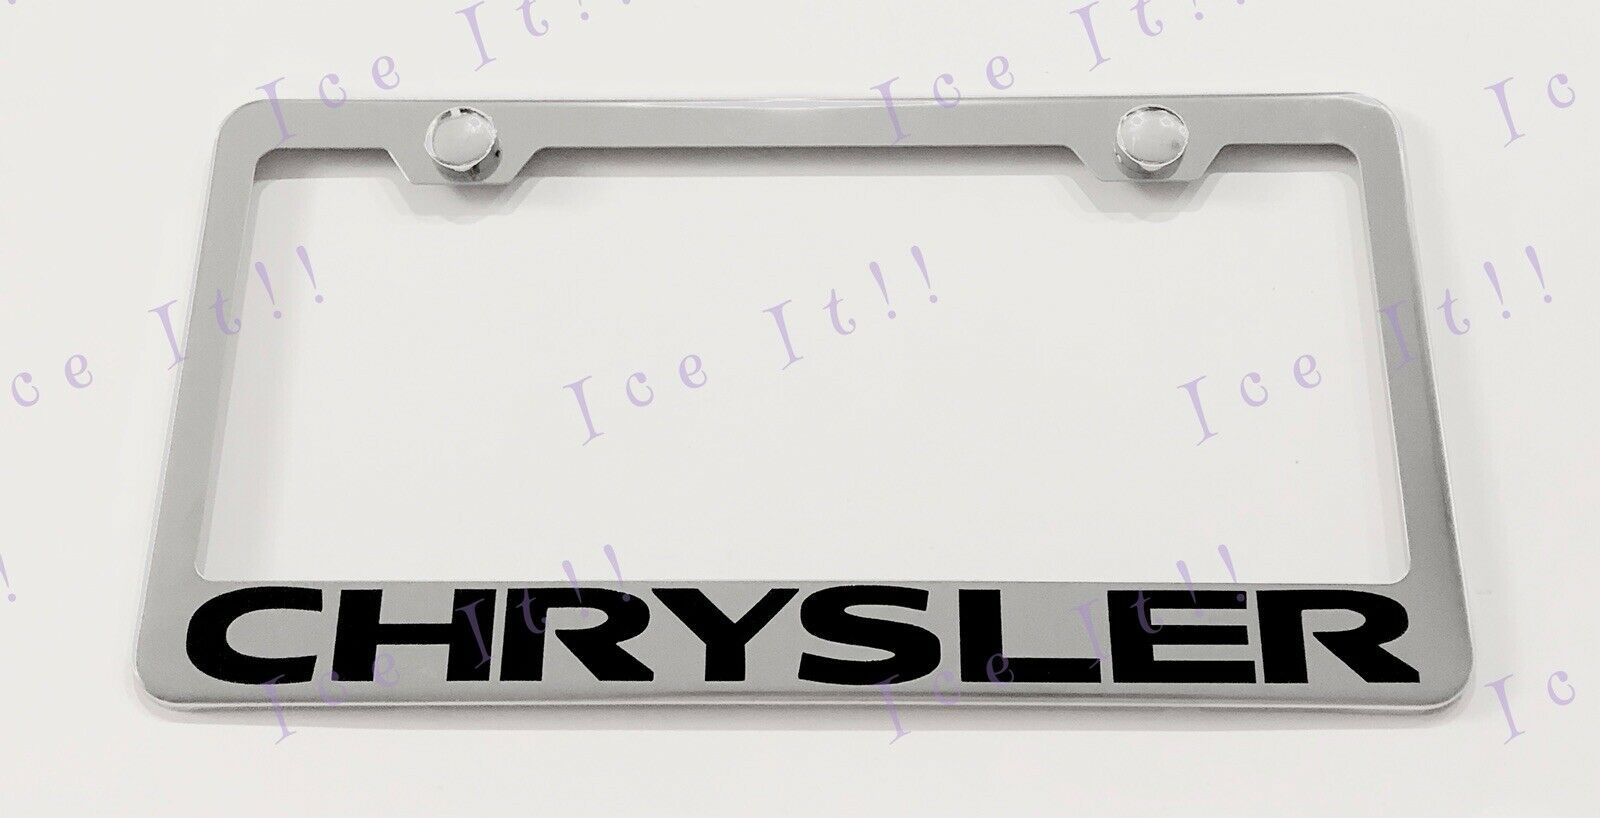 Chrysler Stainless Steel License Plate Frame Rust Free W/ Bolt Caps - $13.85